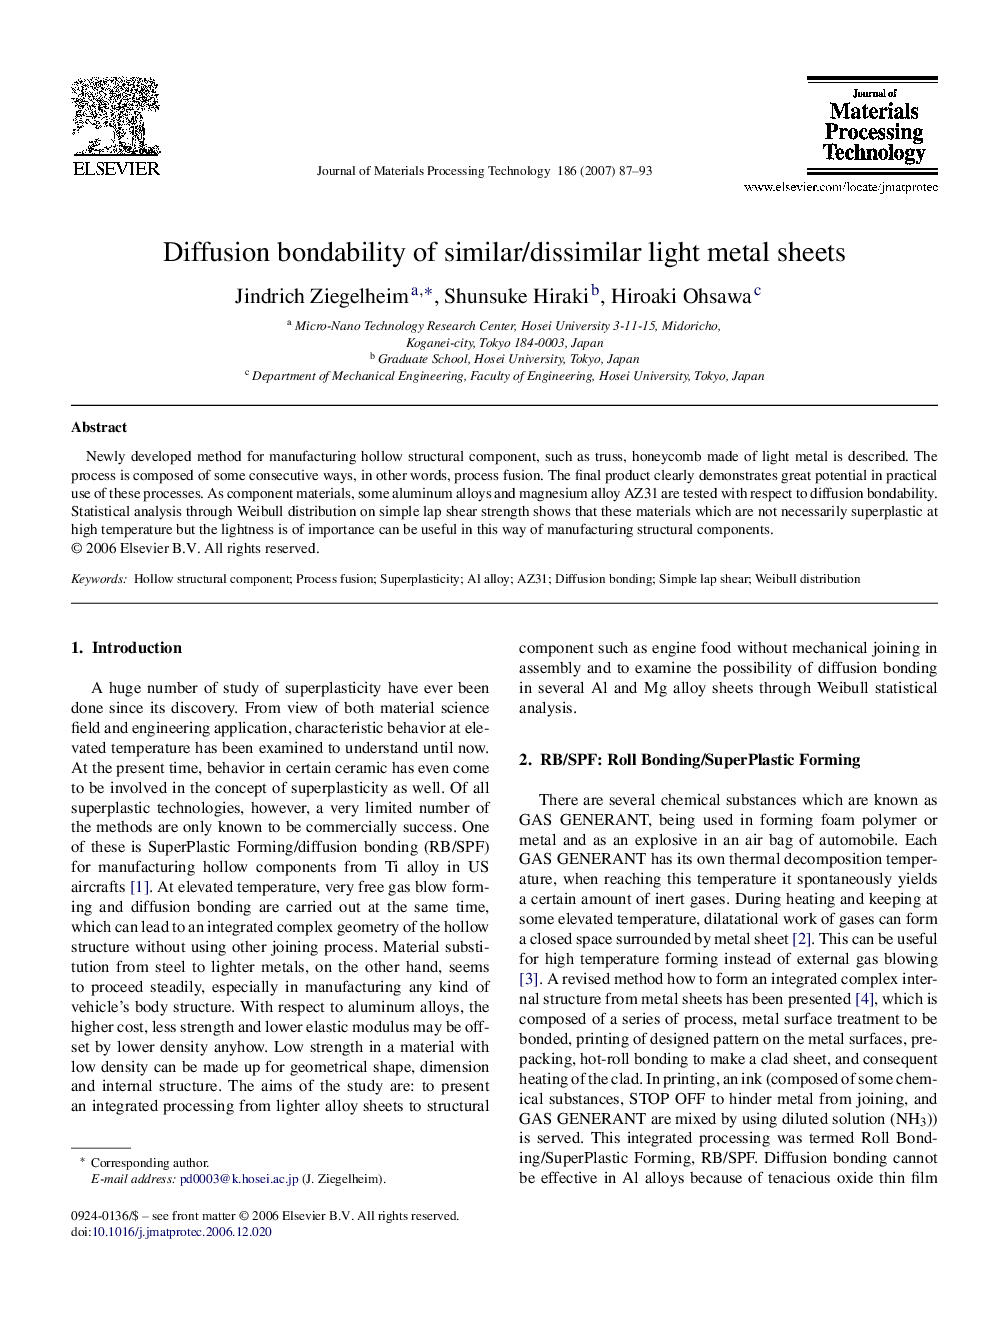 Diffusion bondability of similar/dissimilar light metal sheets